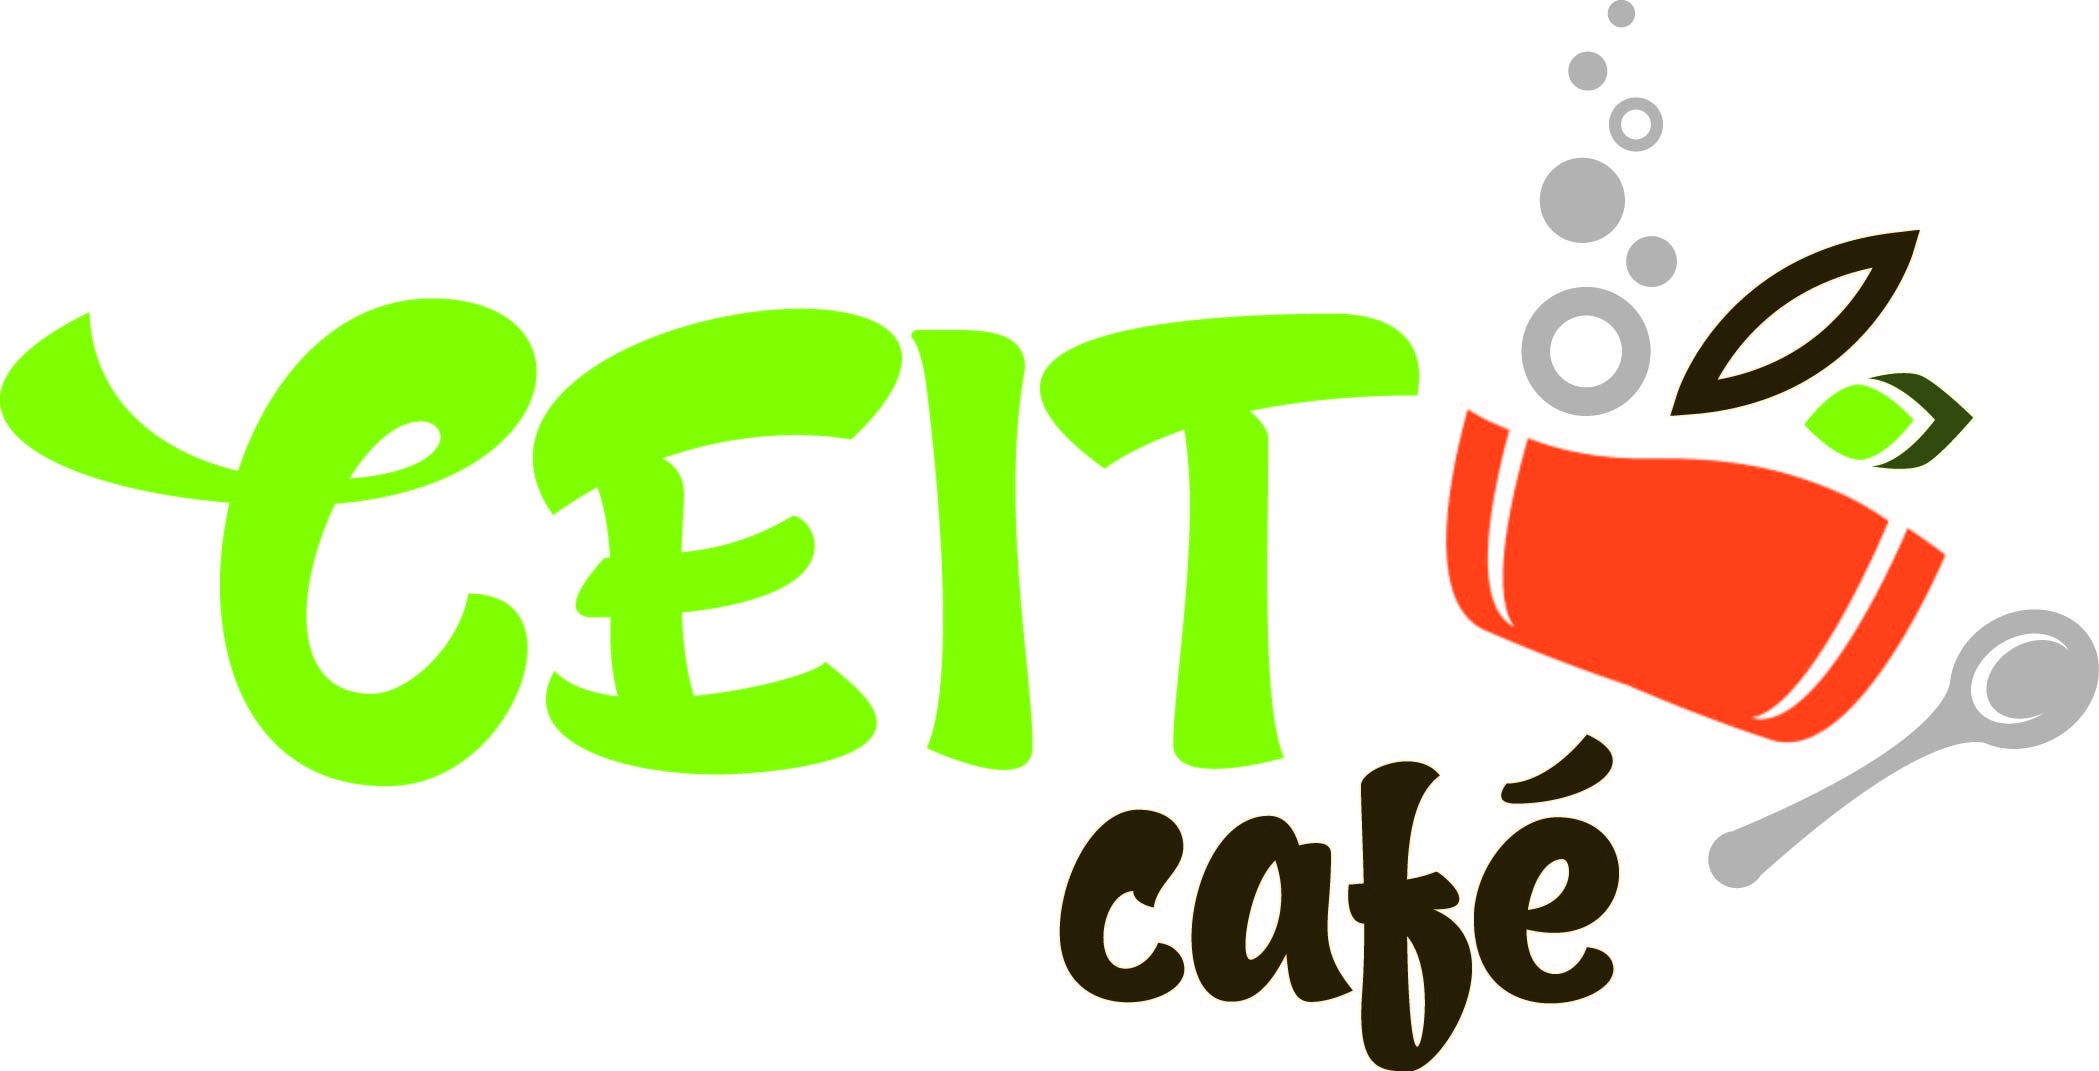 CEIT cafe logo